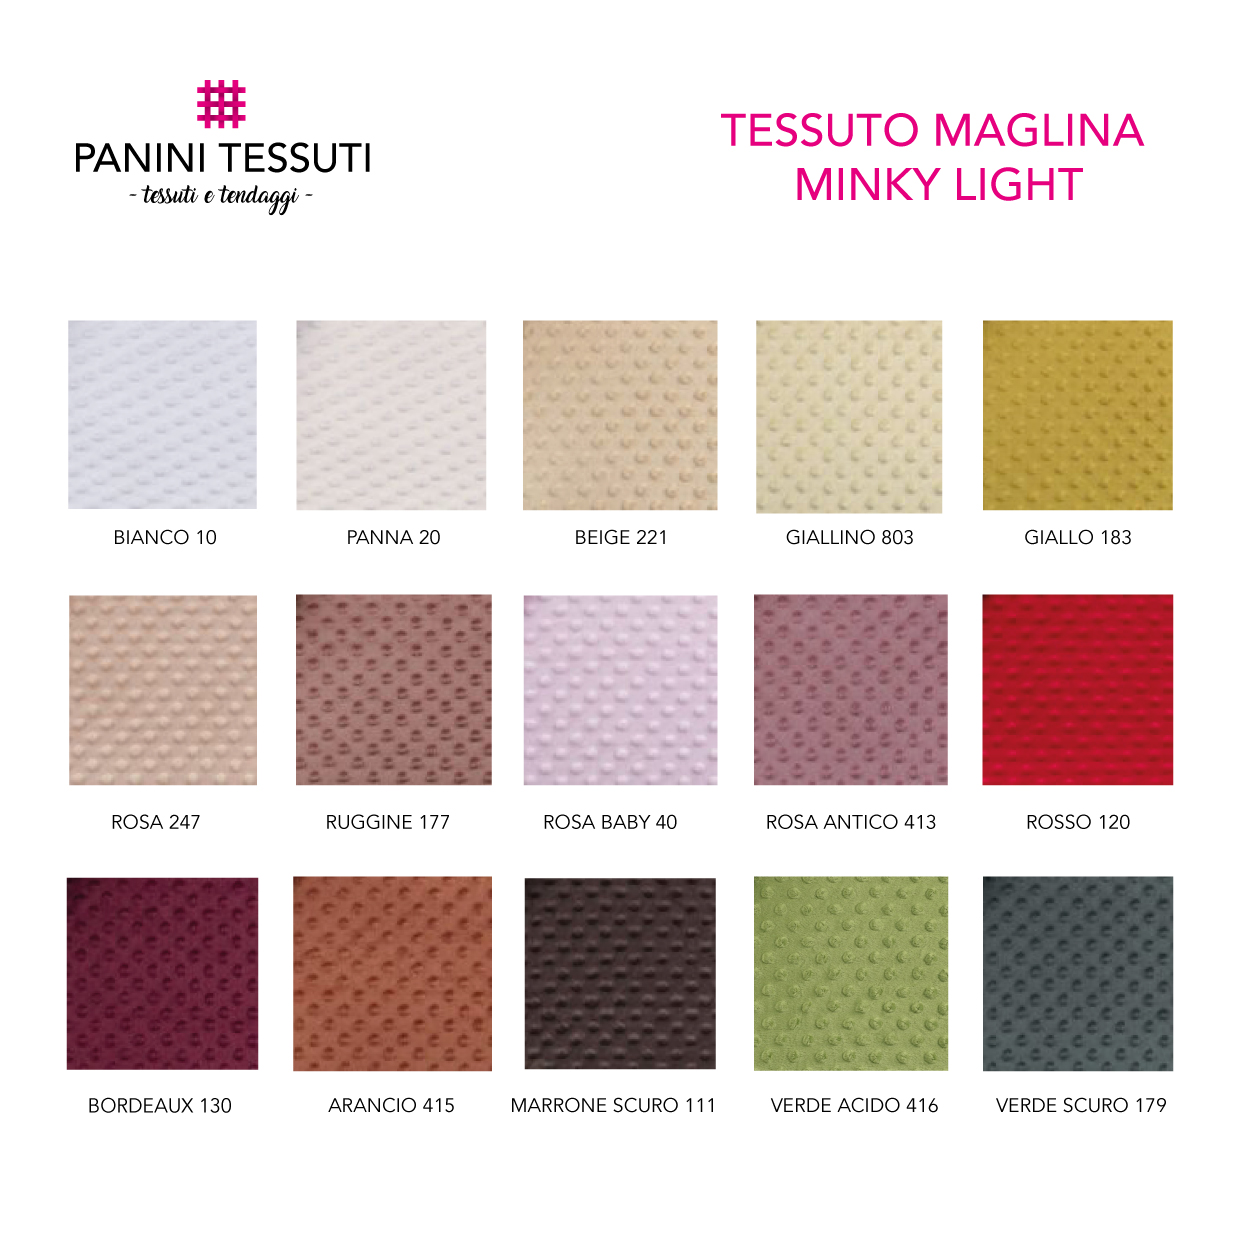 Tessuto Maglina Minky Lights